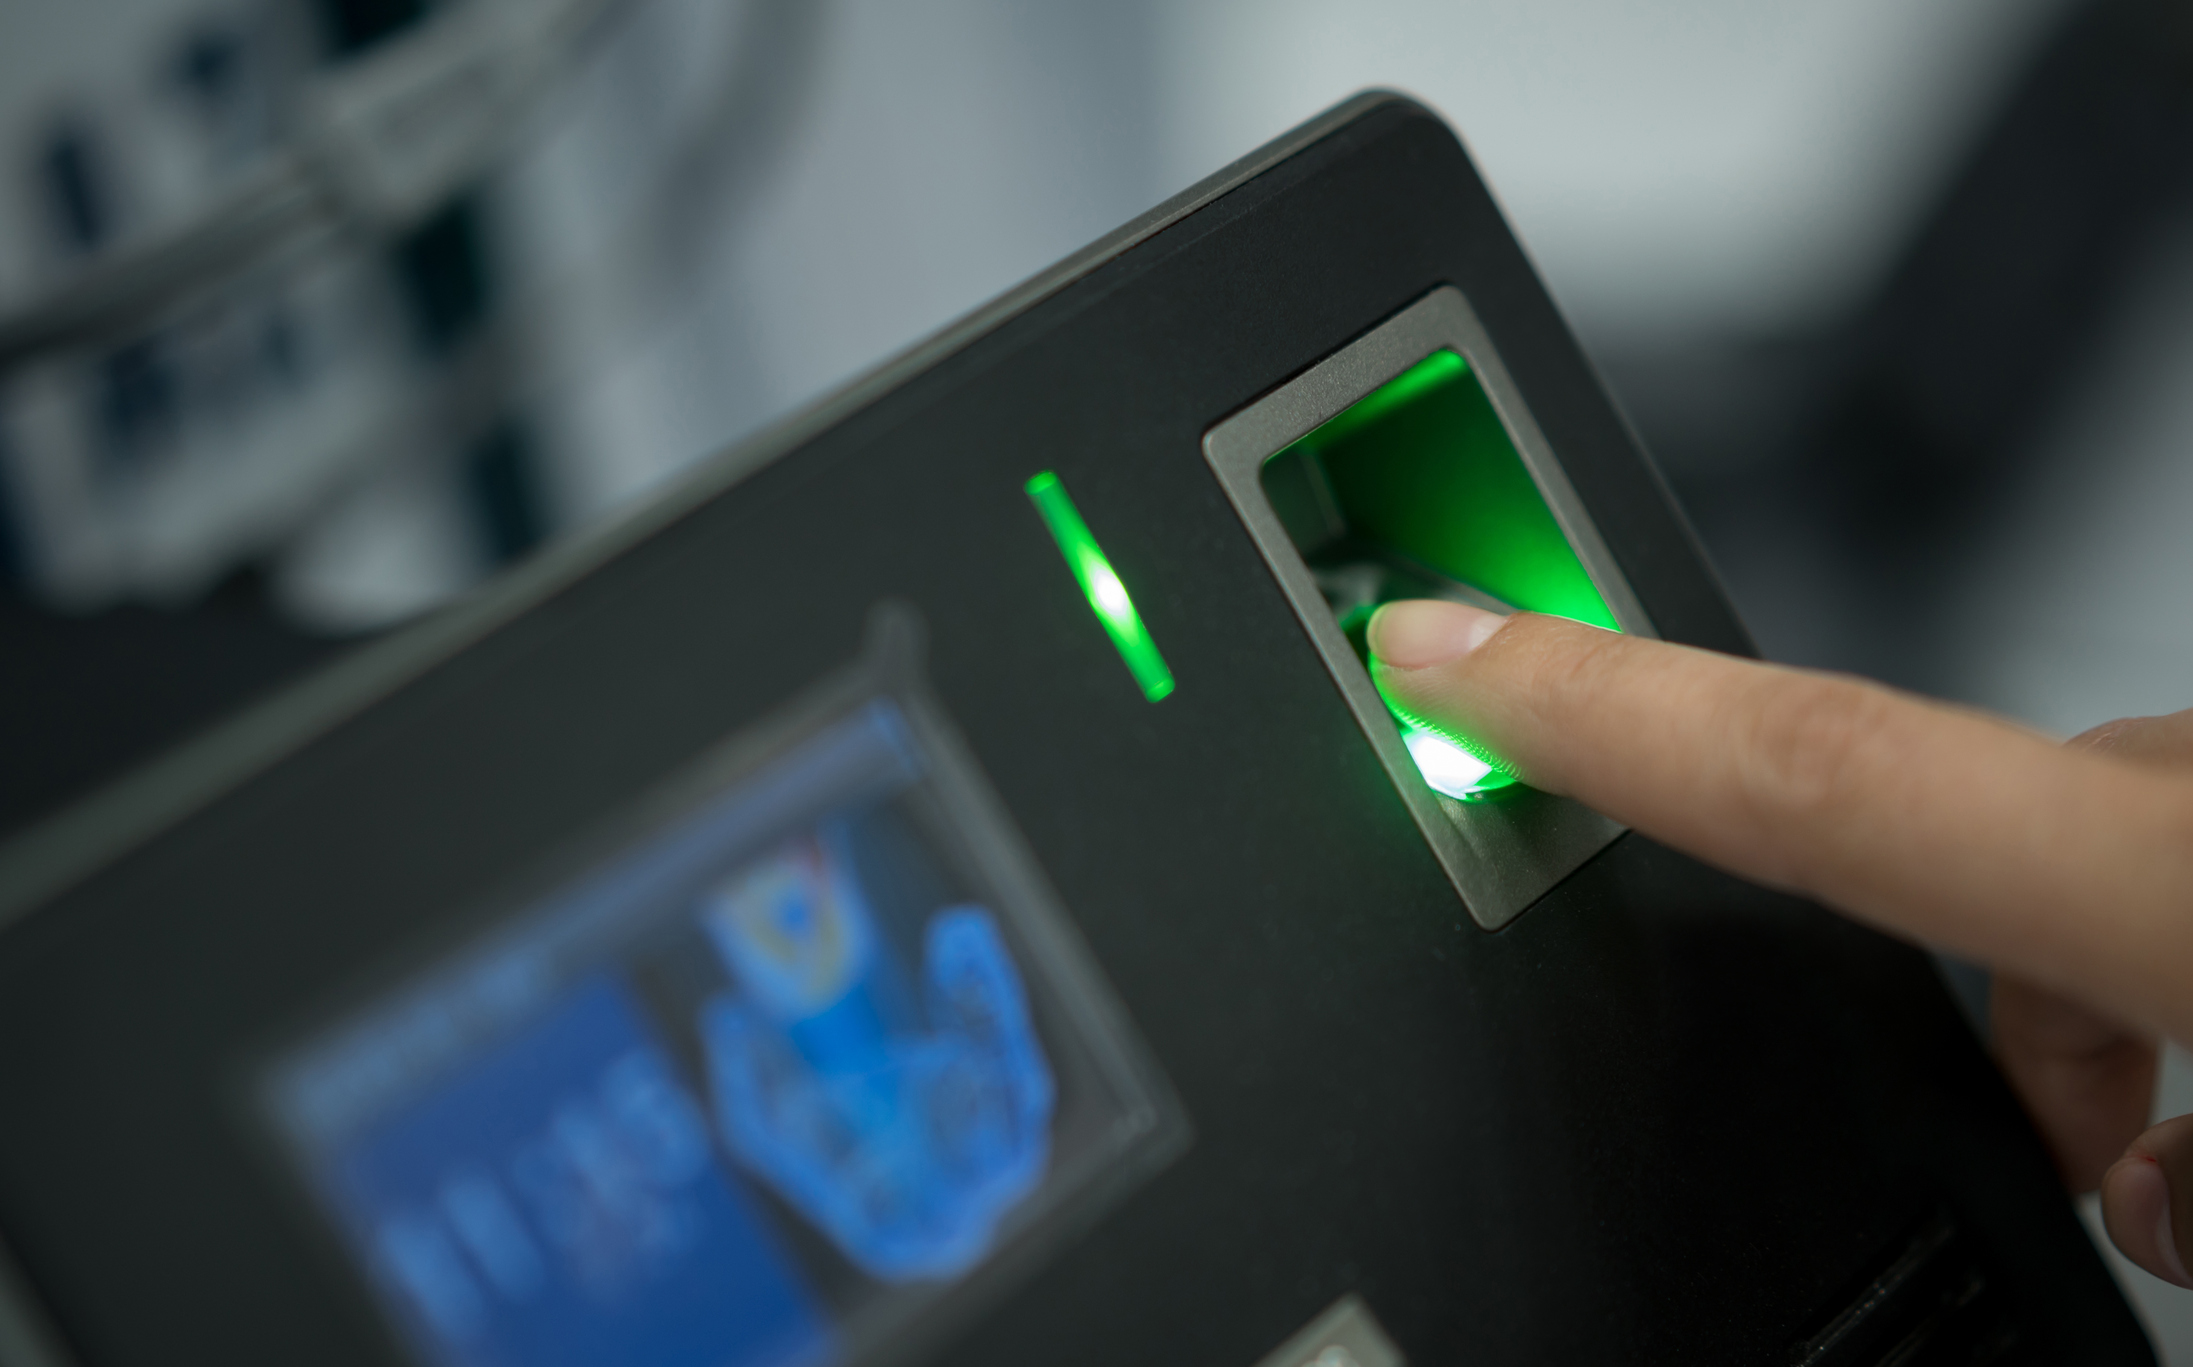 biometrics fingerprint reader